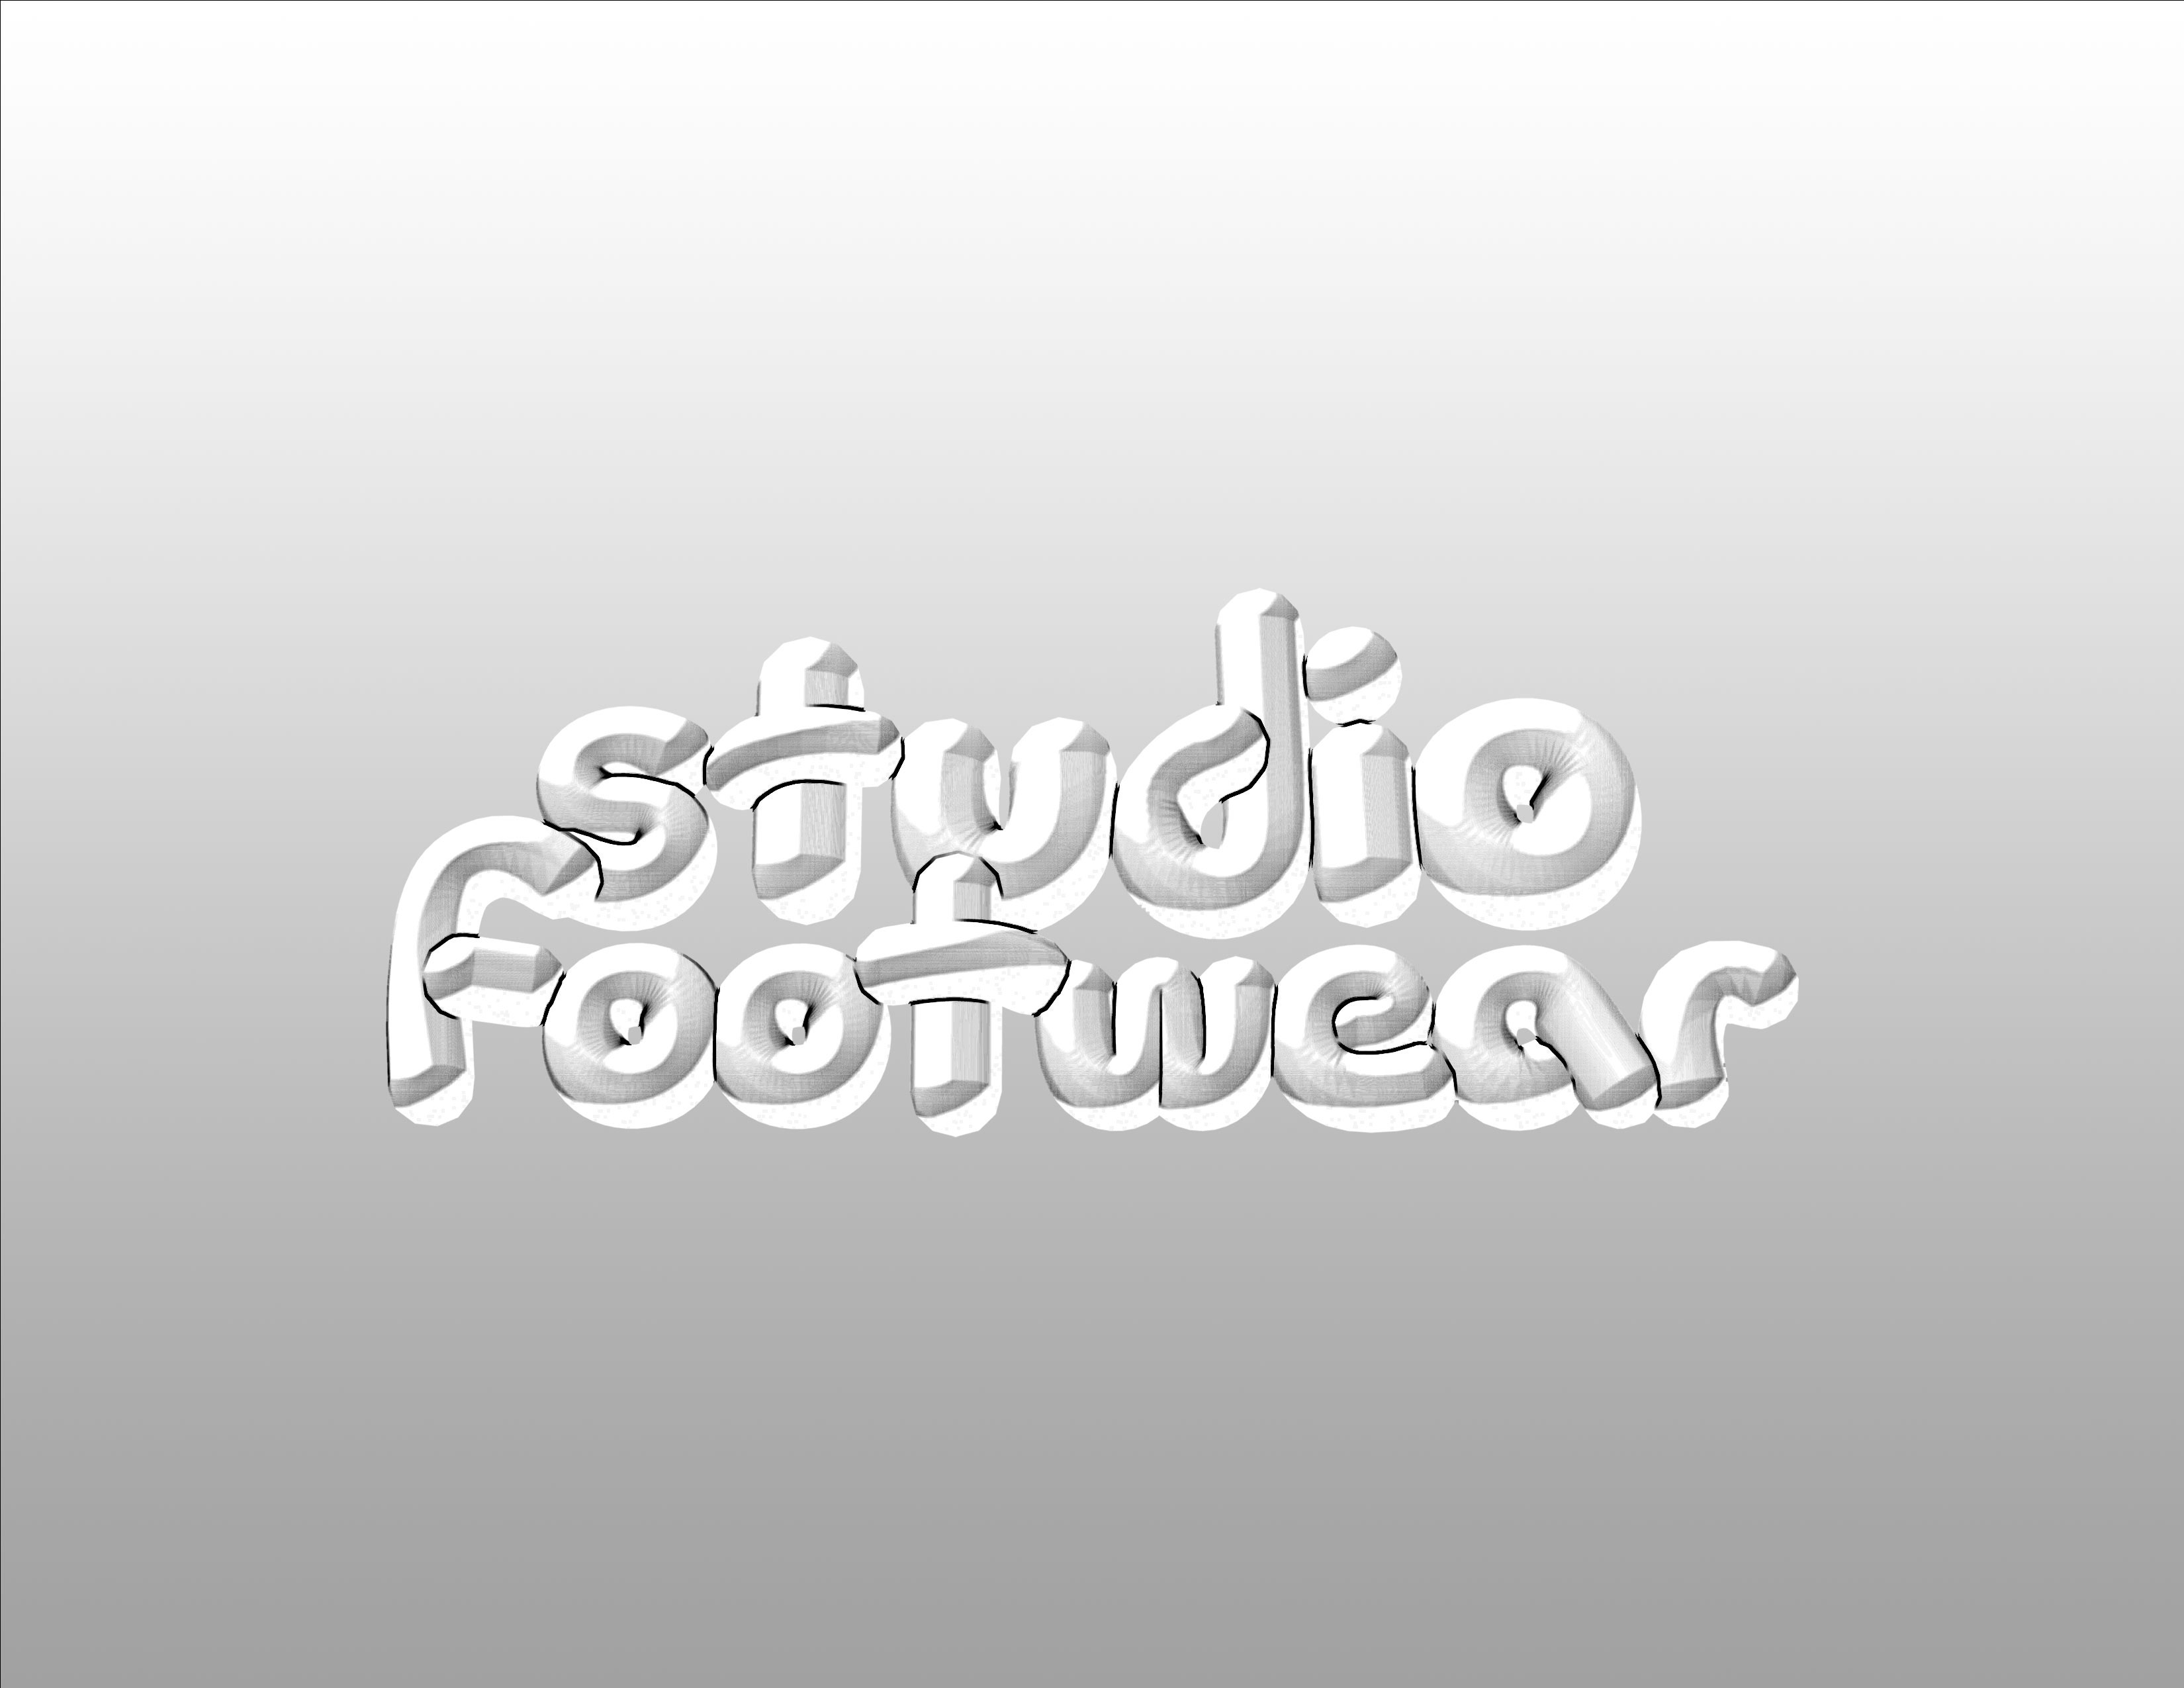 studio footwear thumbnail thumbnail